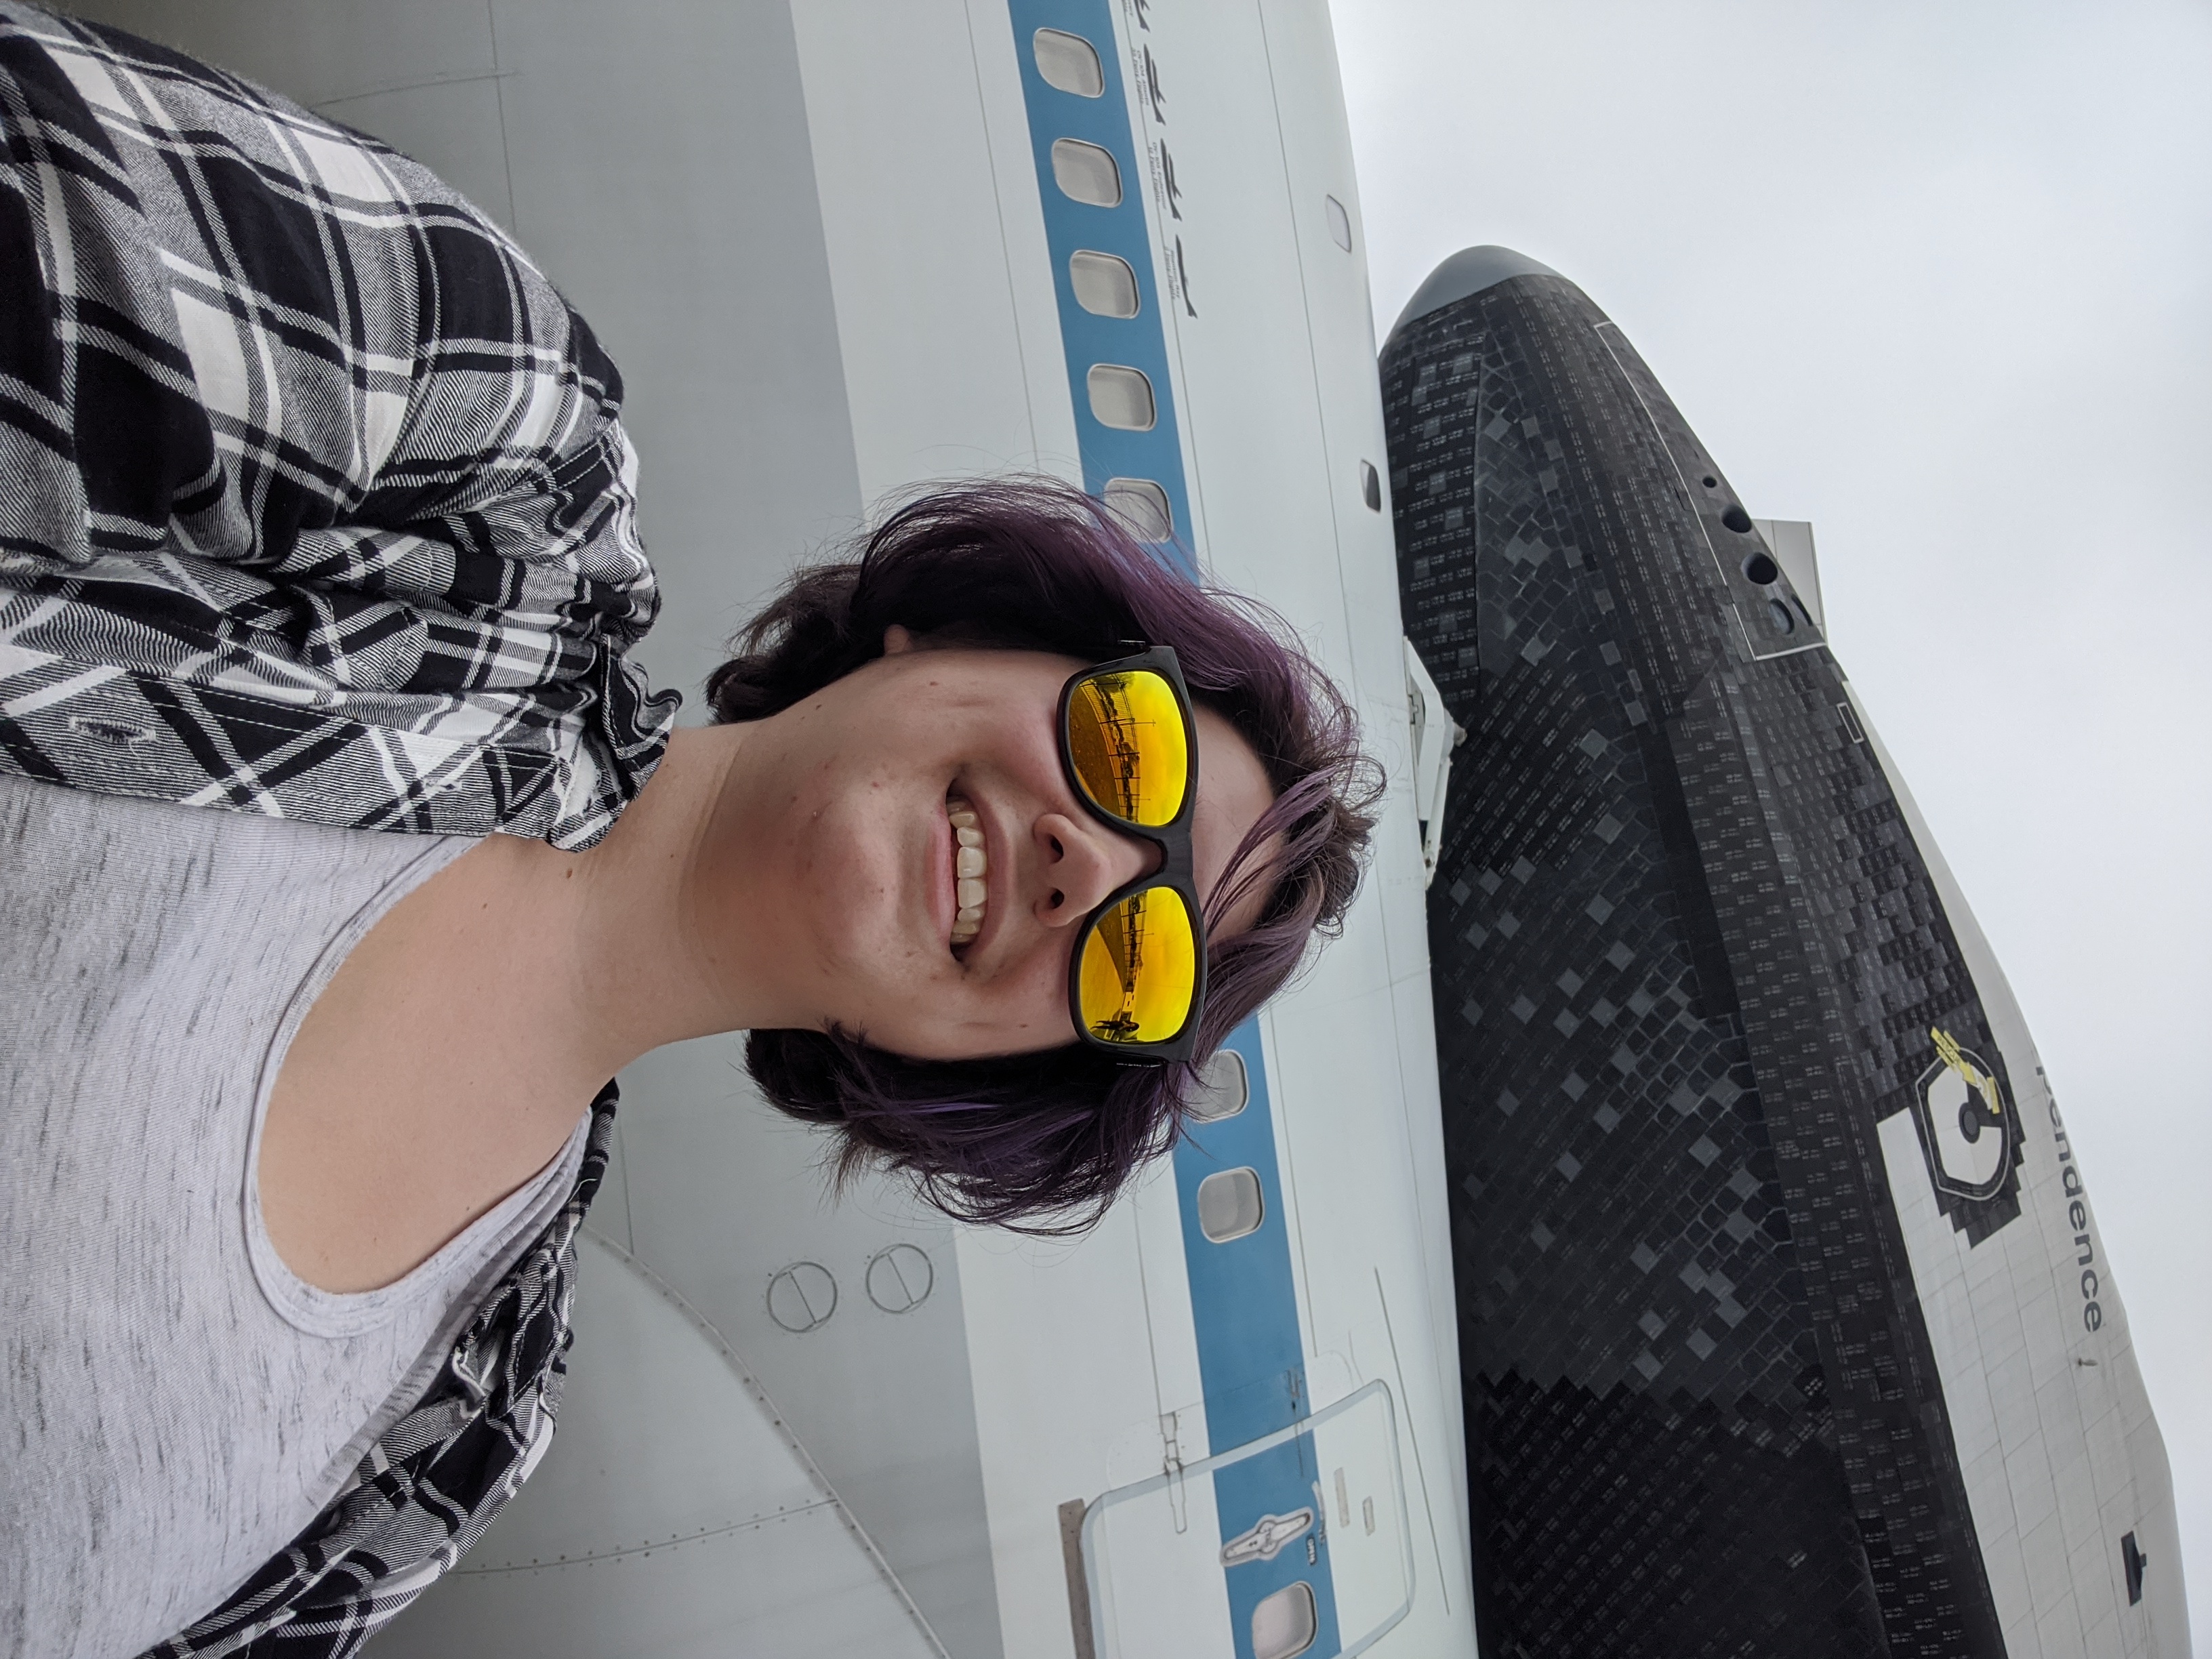 Amanda under the spaceshuttle at Johnson Space Center